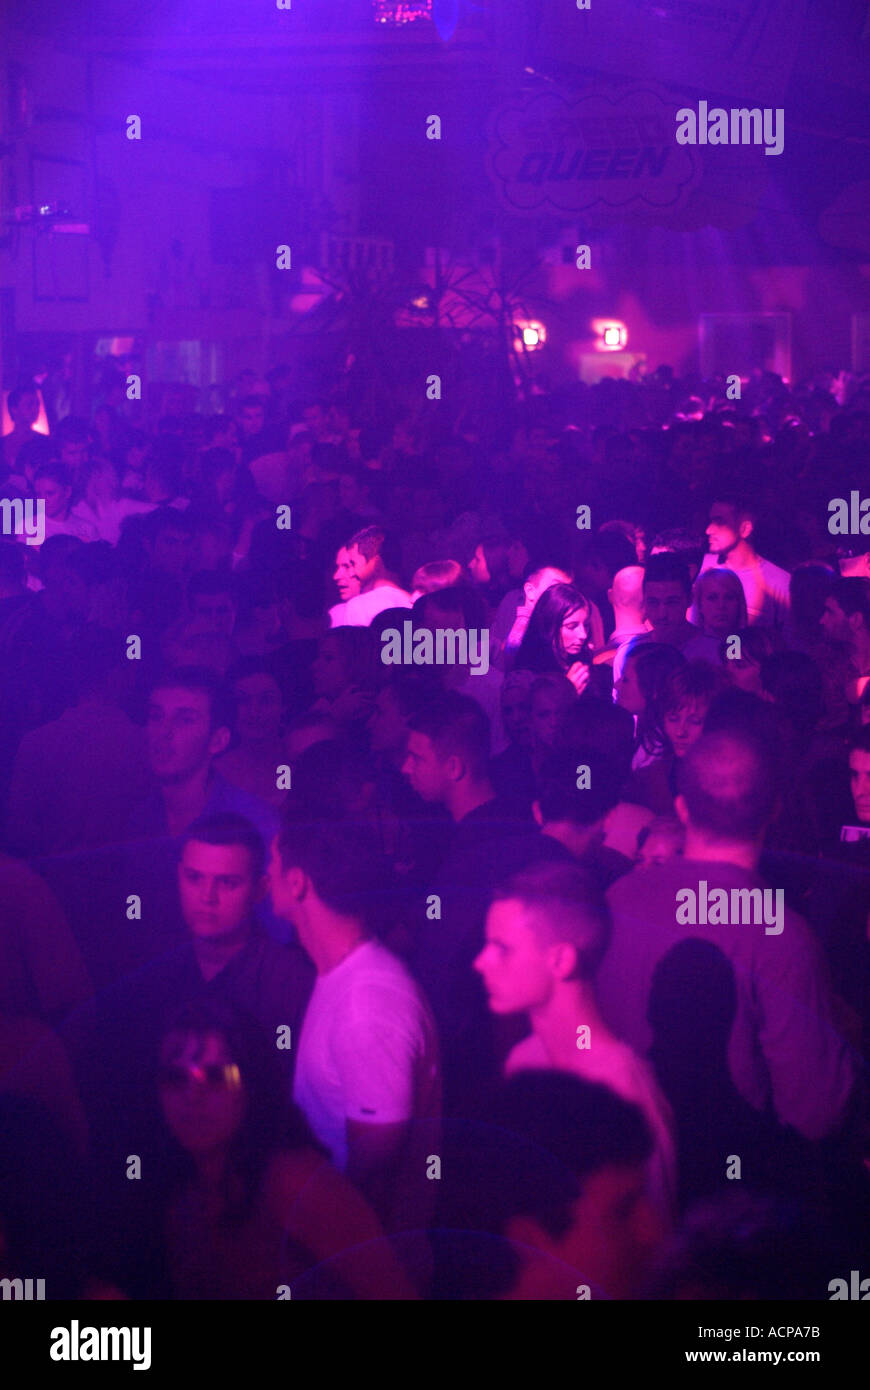 Nightclub Dancefloor Packed with Revellers Stock Photo